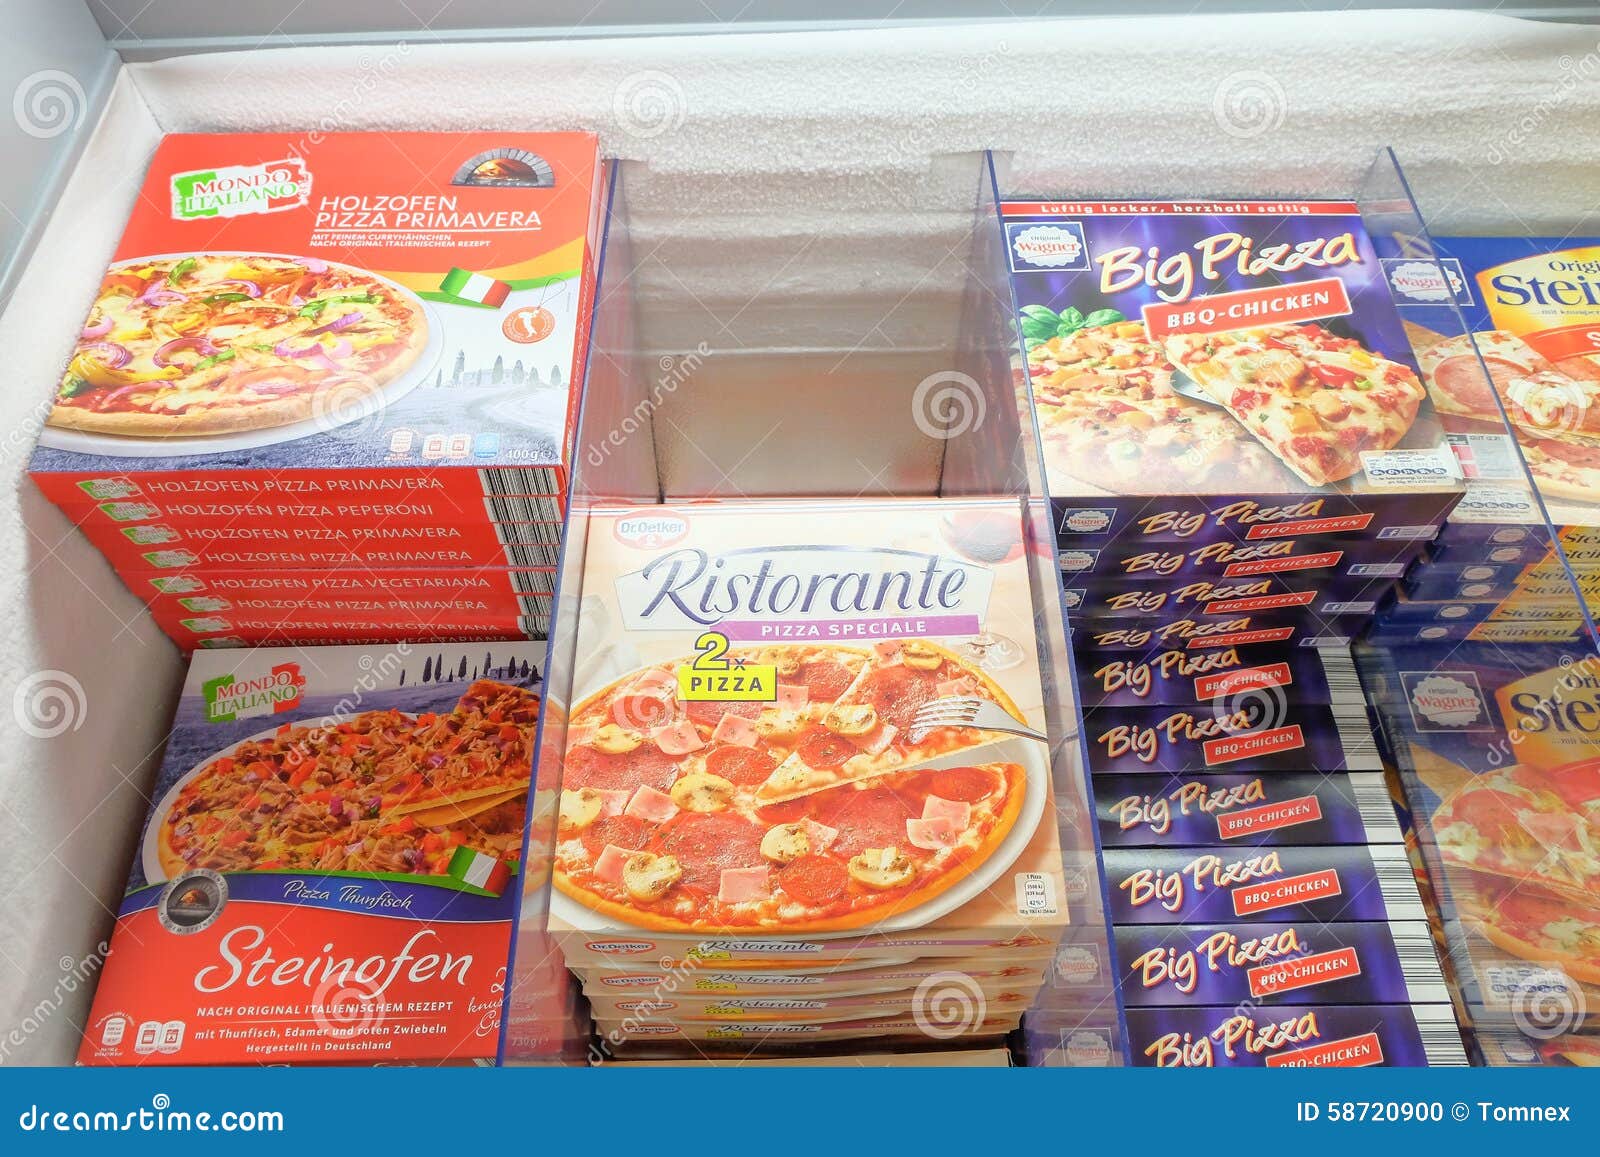 Tu PIZZA preferida Pizzas-congeladas-58720900